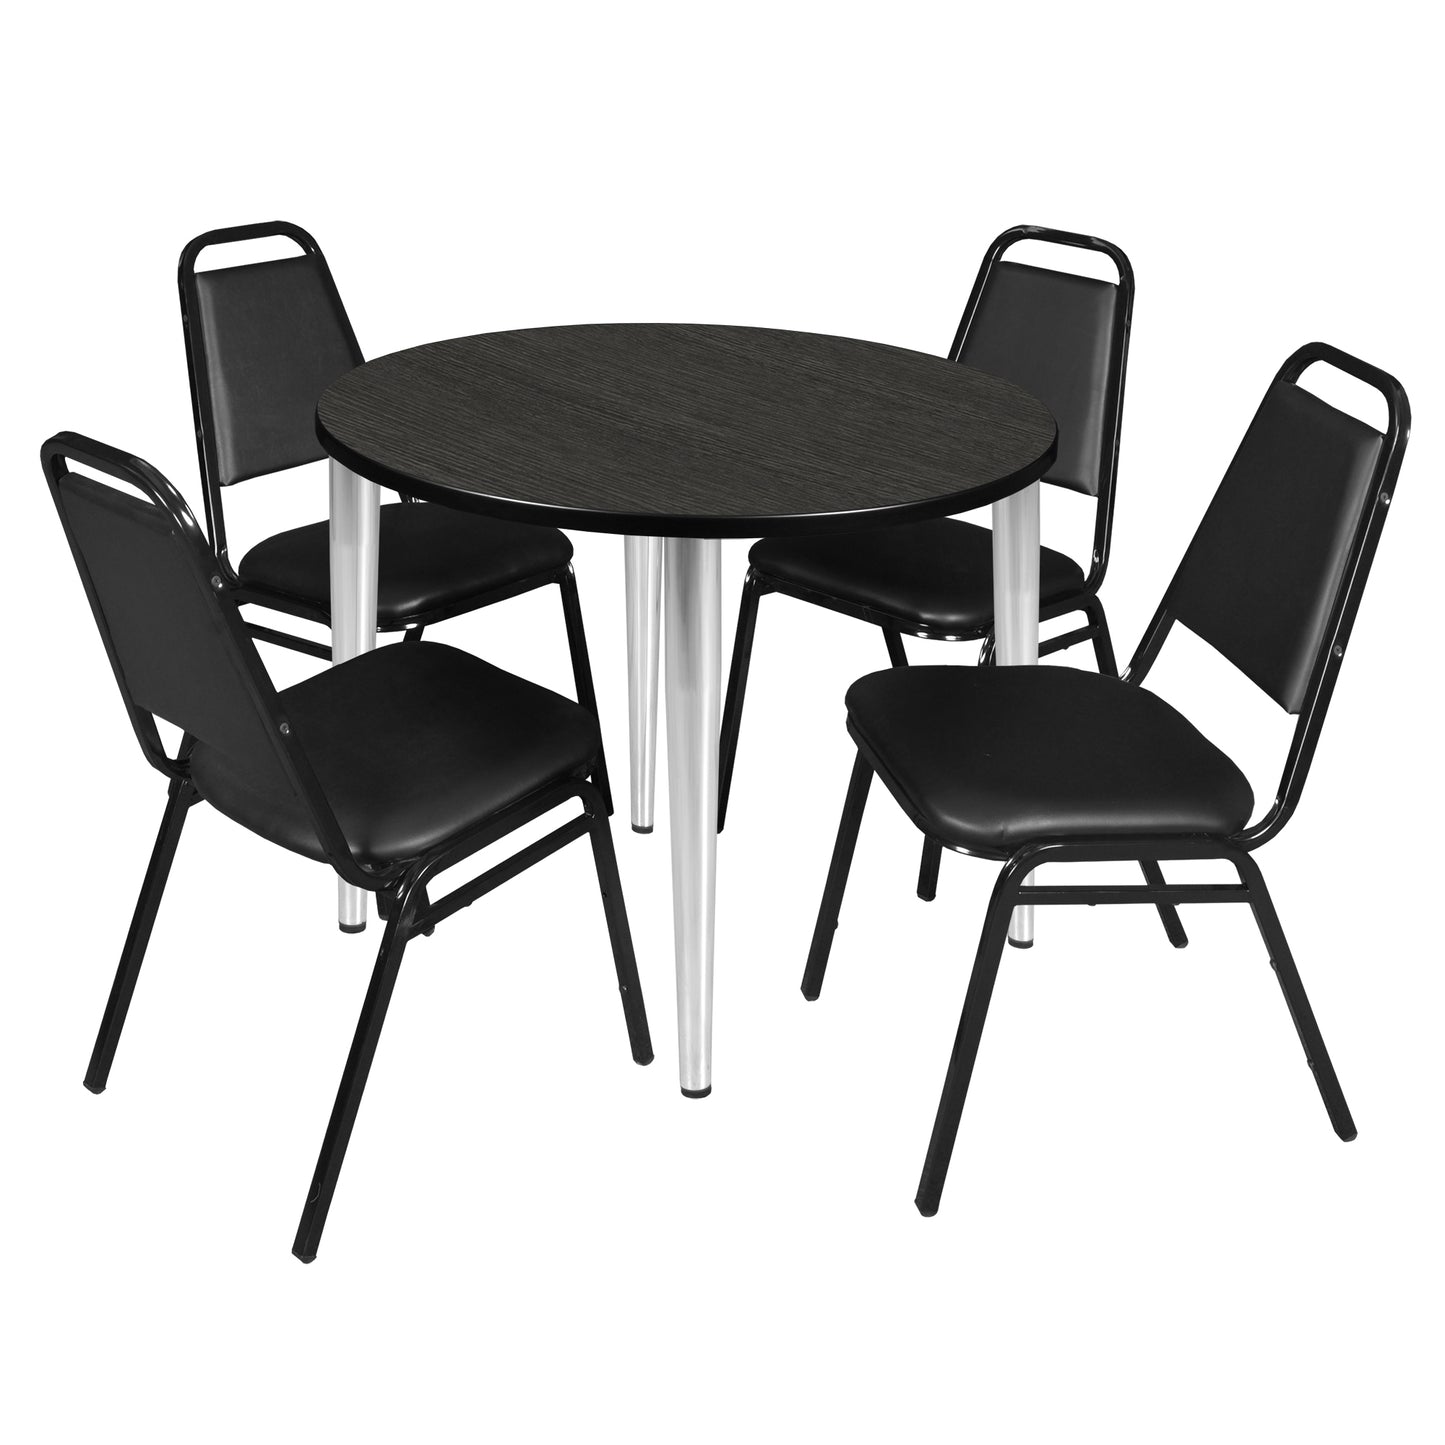 Regency Kahlo 42 in. Round Breakroom Table & 4 Restaurant Stack Chairs - Black